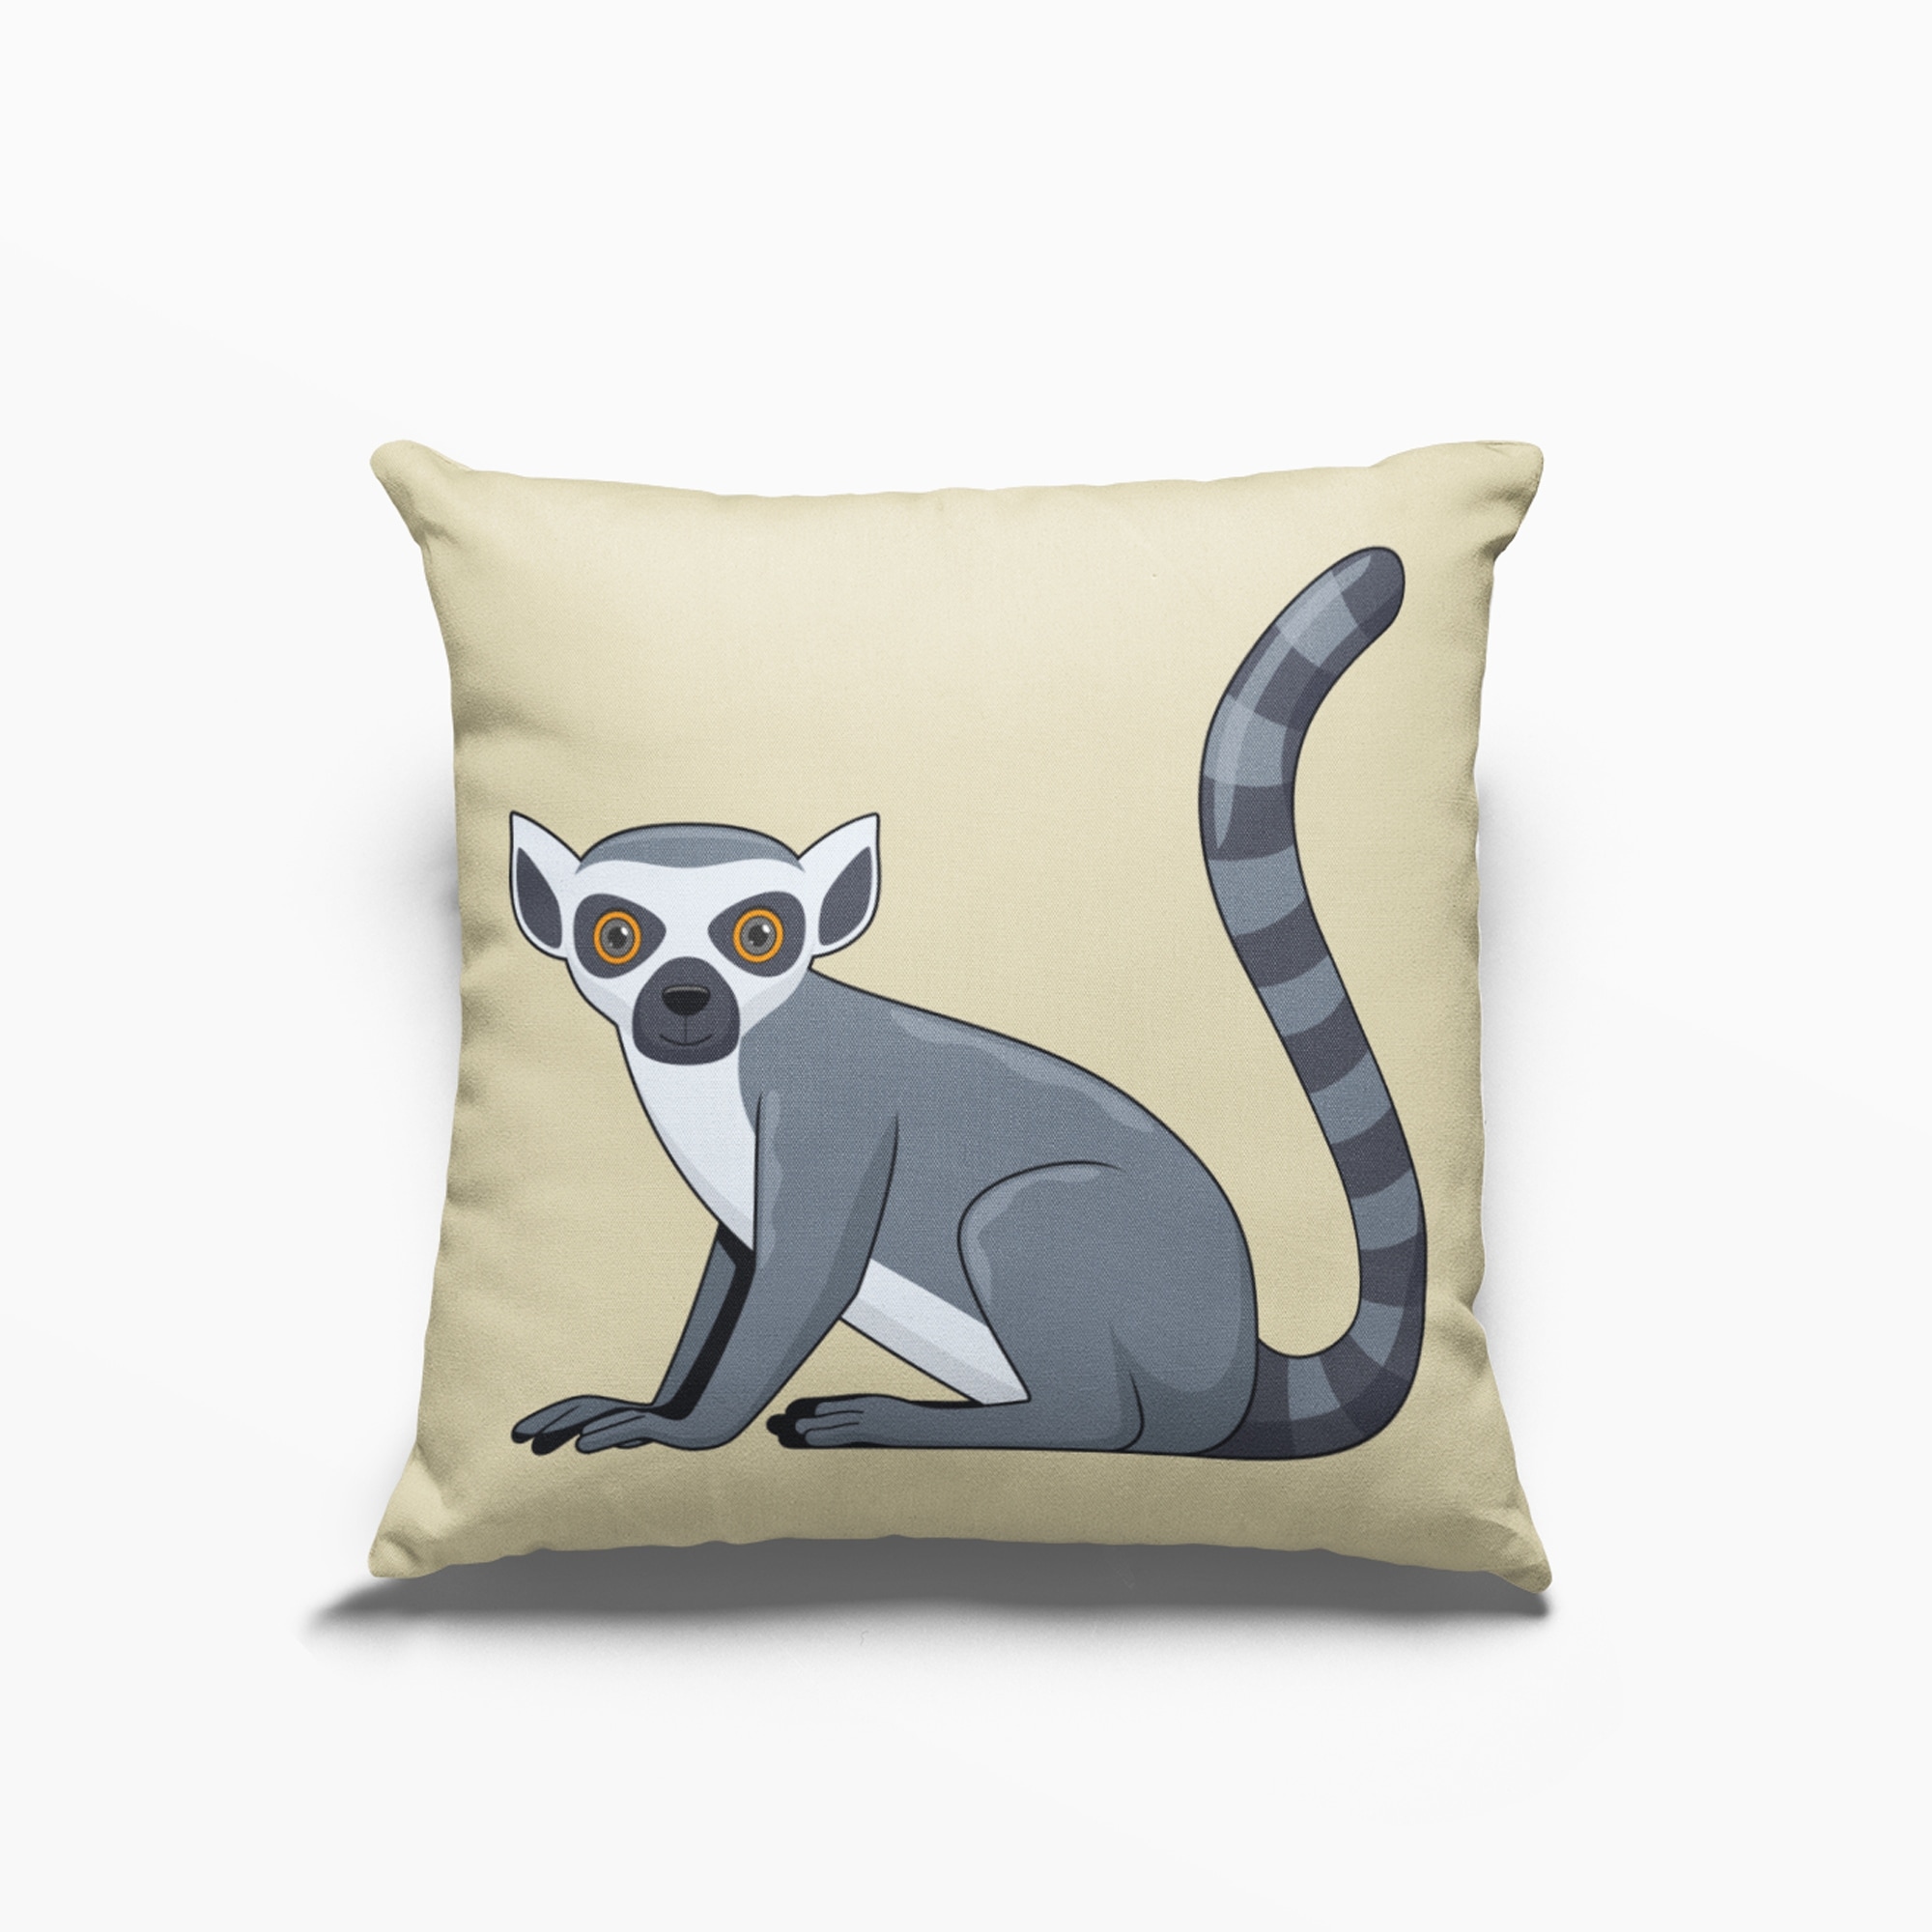 Lemur Animals Cushion Cover